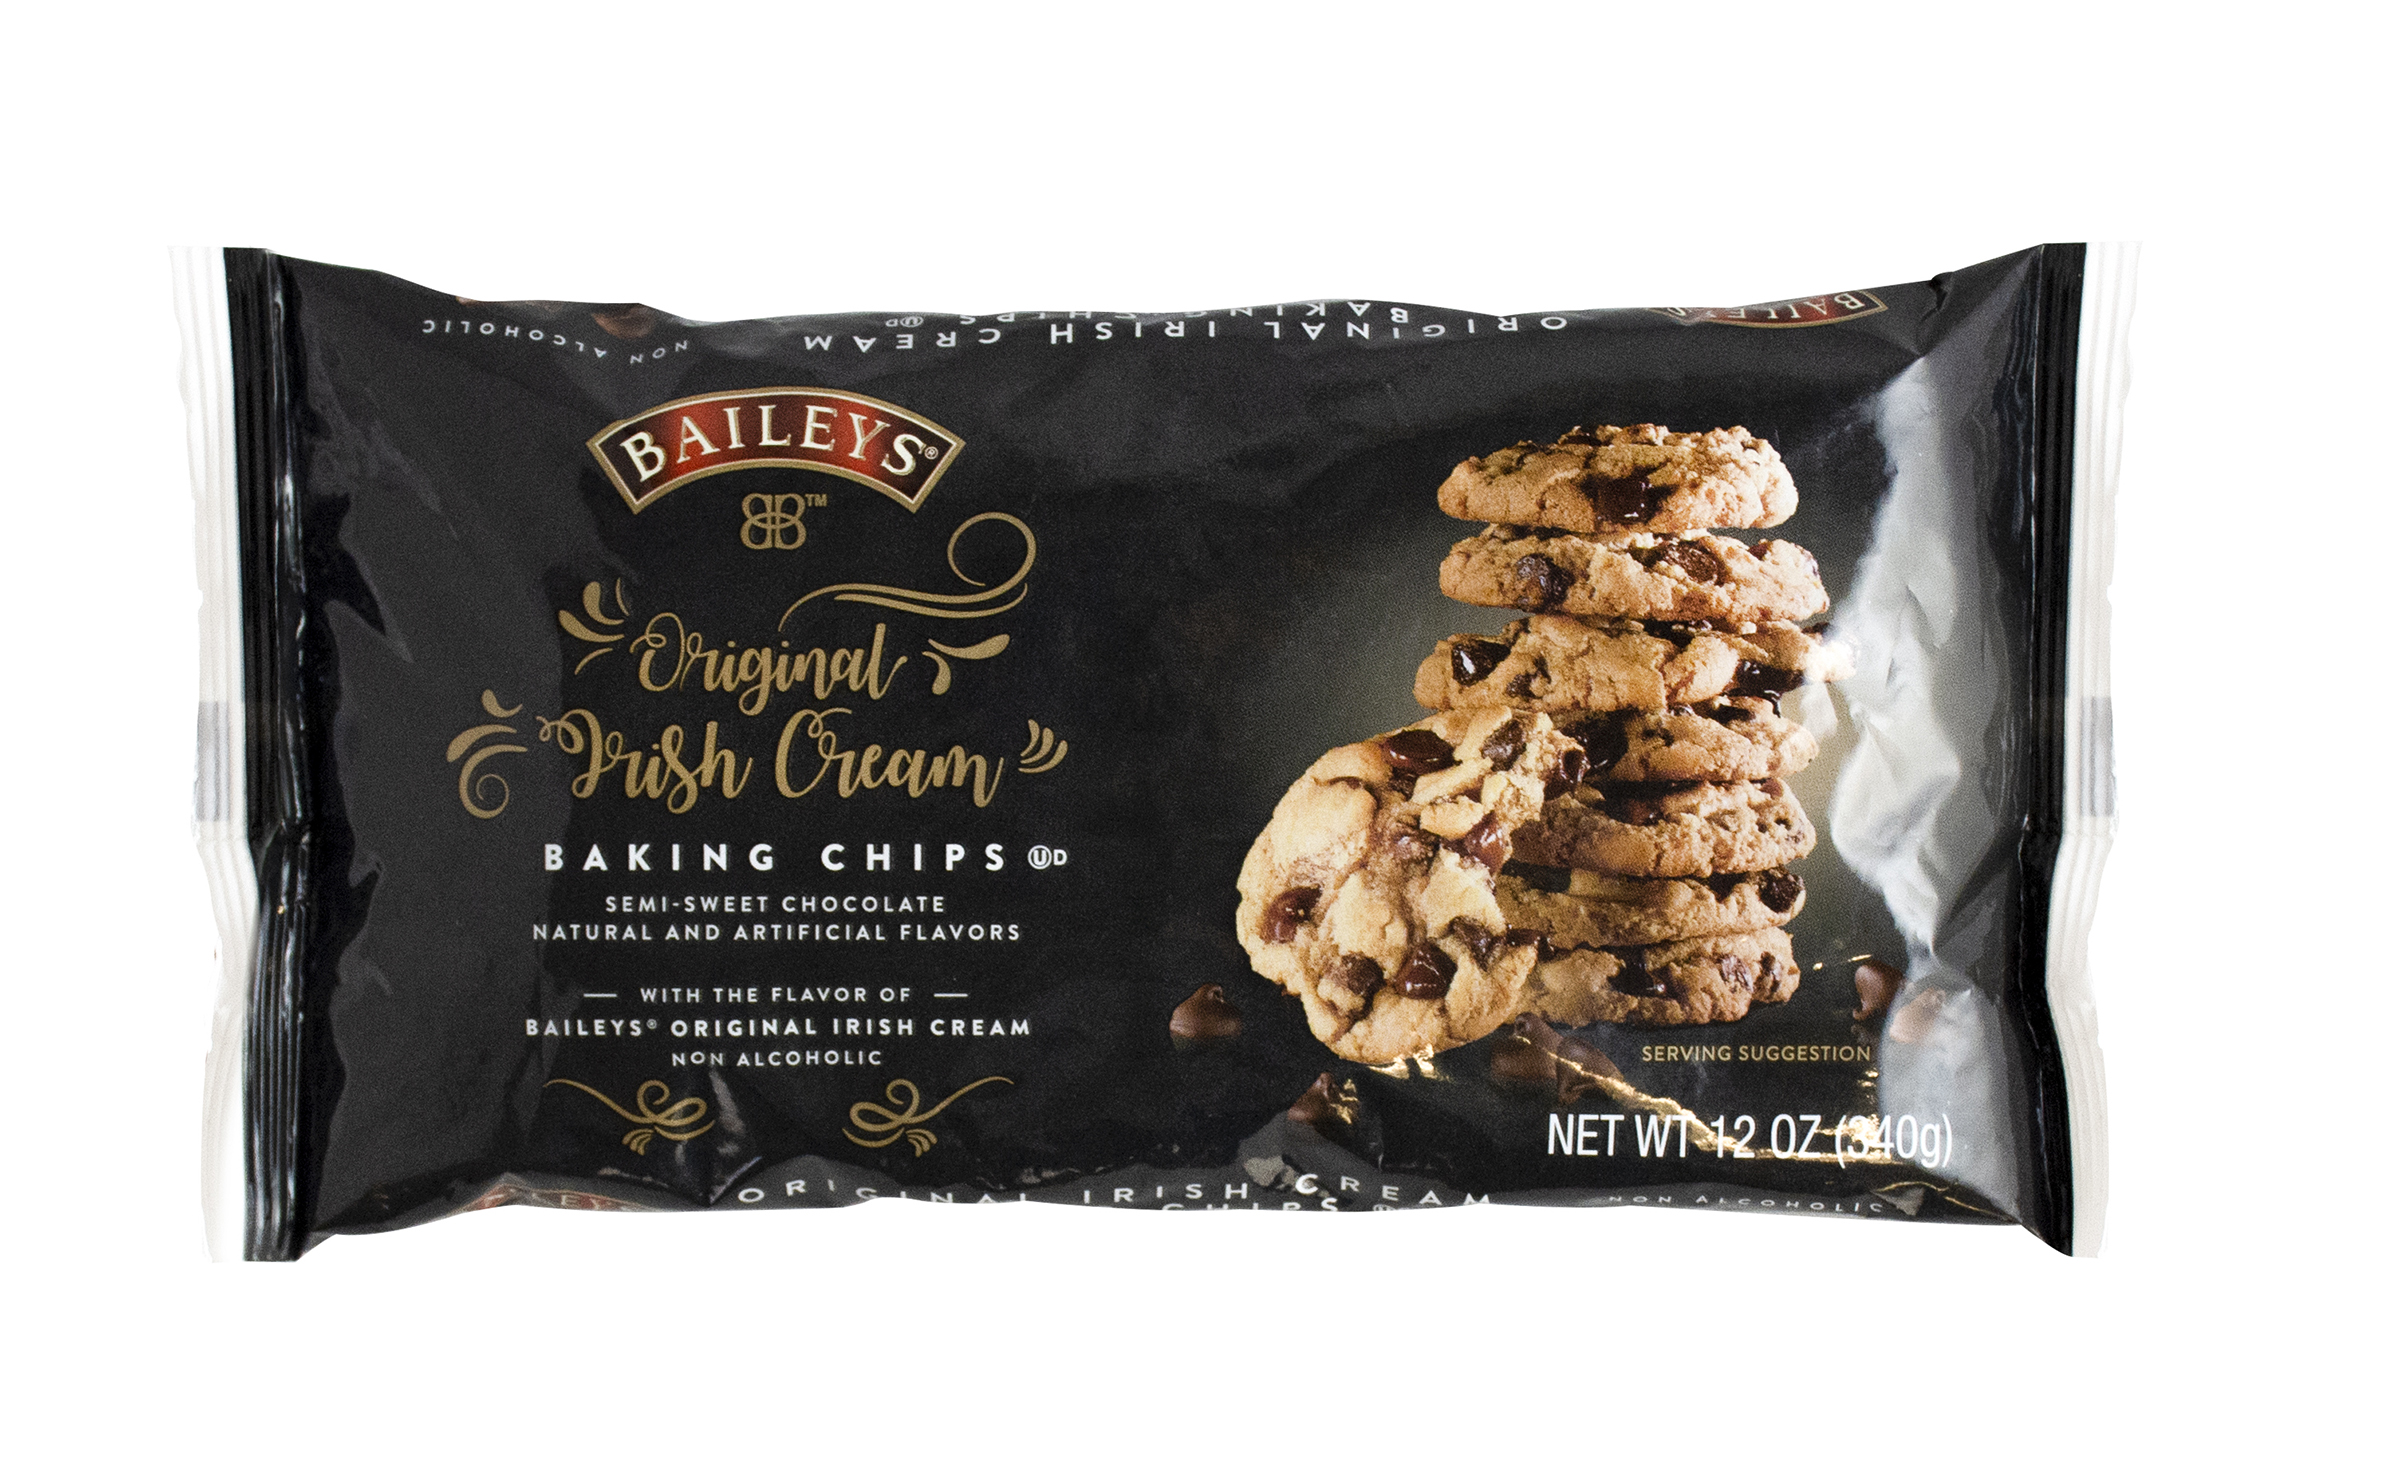 BAILEYS Original Irish Cream Baking Chips, Non-Alcoholic 12 oz. Pouch - image 1 of 5